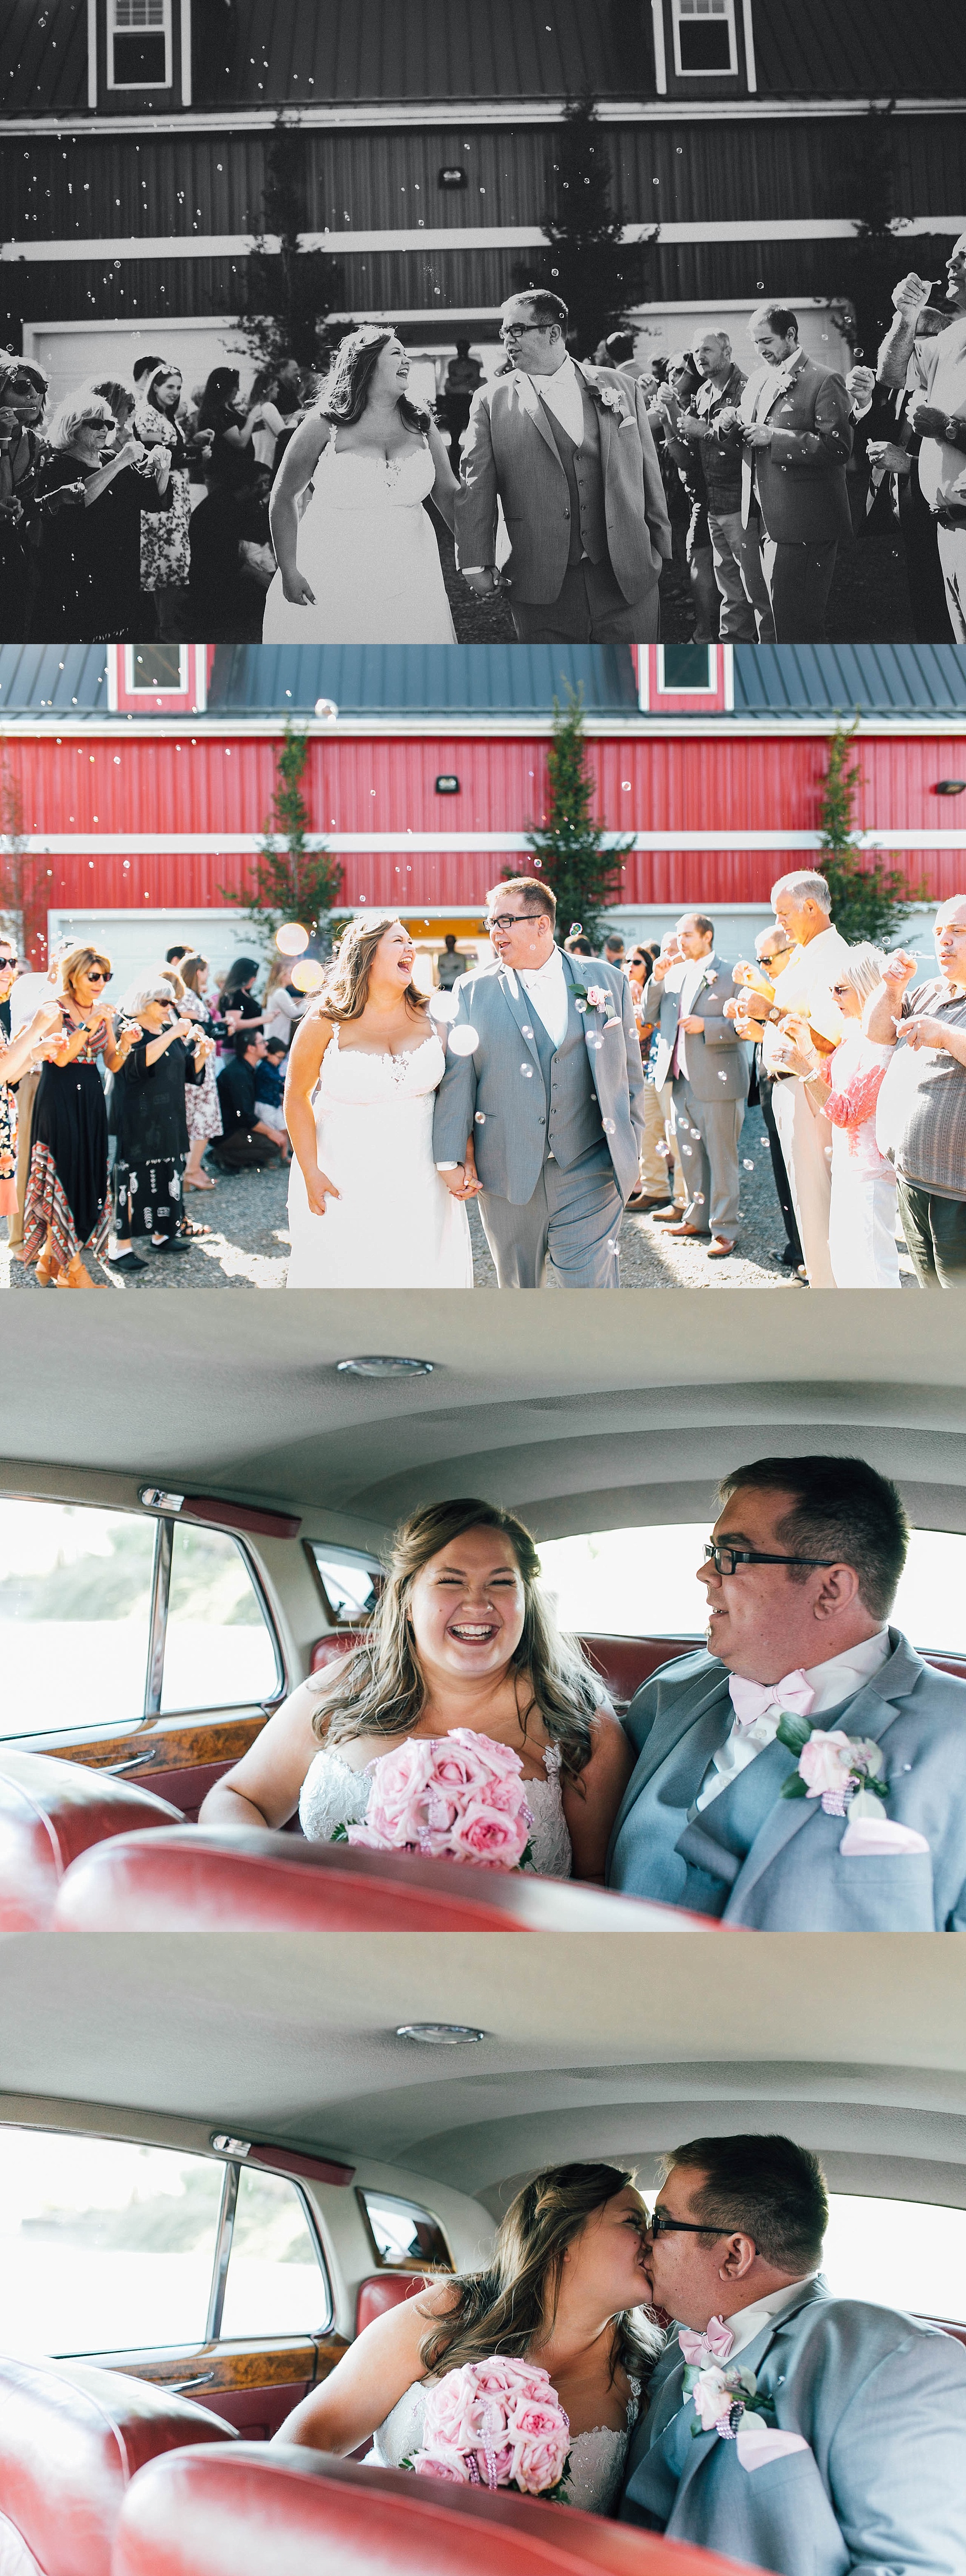 Stocker Farms Wedding Photographer Seattle Wedding Photography Katie and Kyle - Ashley Vos Photography-9.jpg